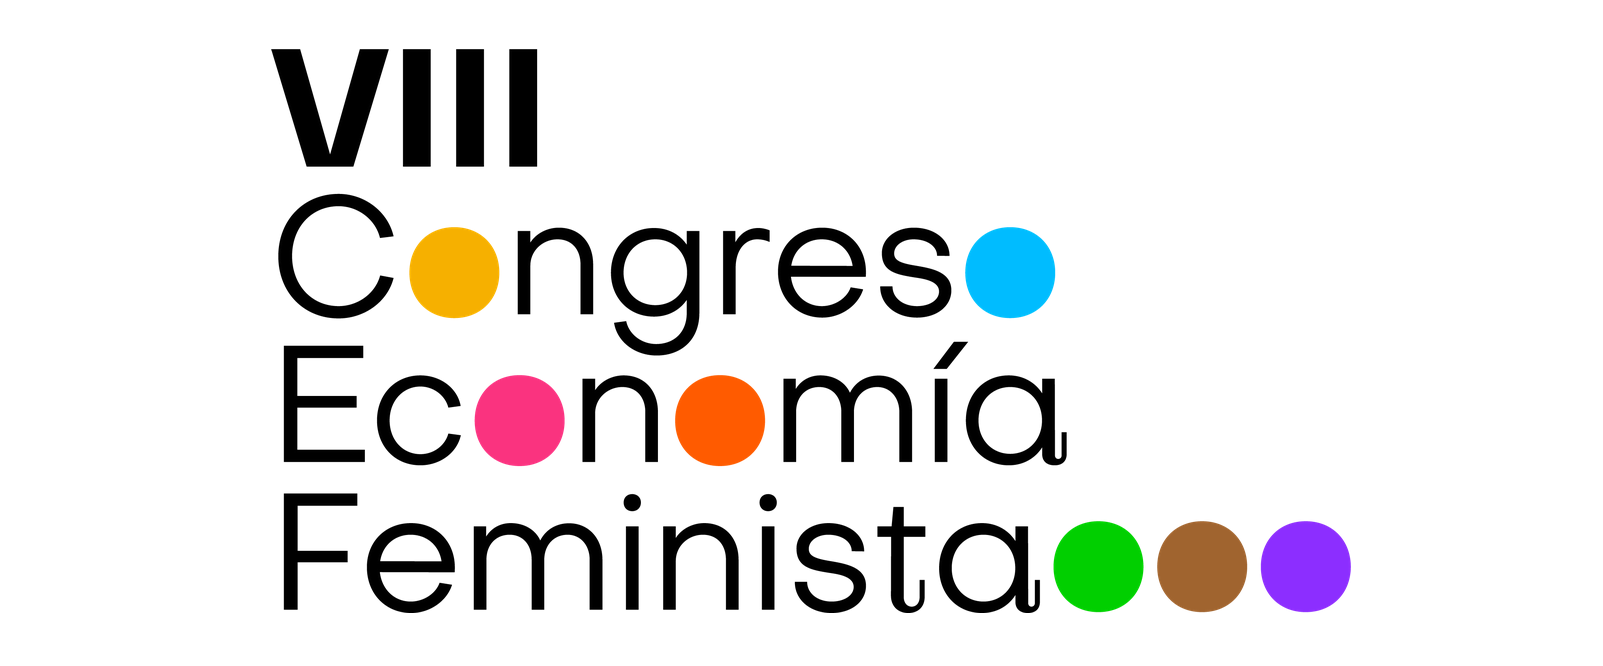 Towards the Congress of Feminist Economy (1)